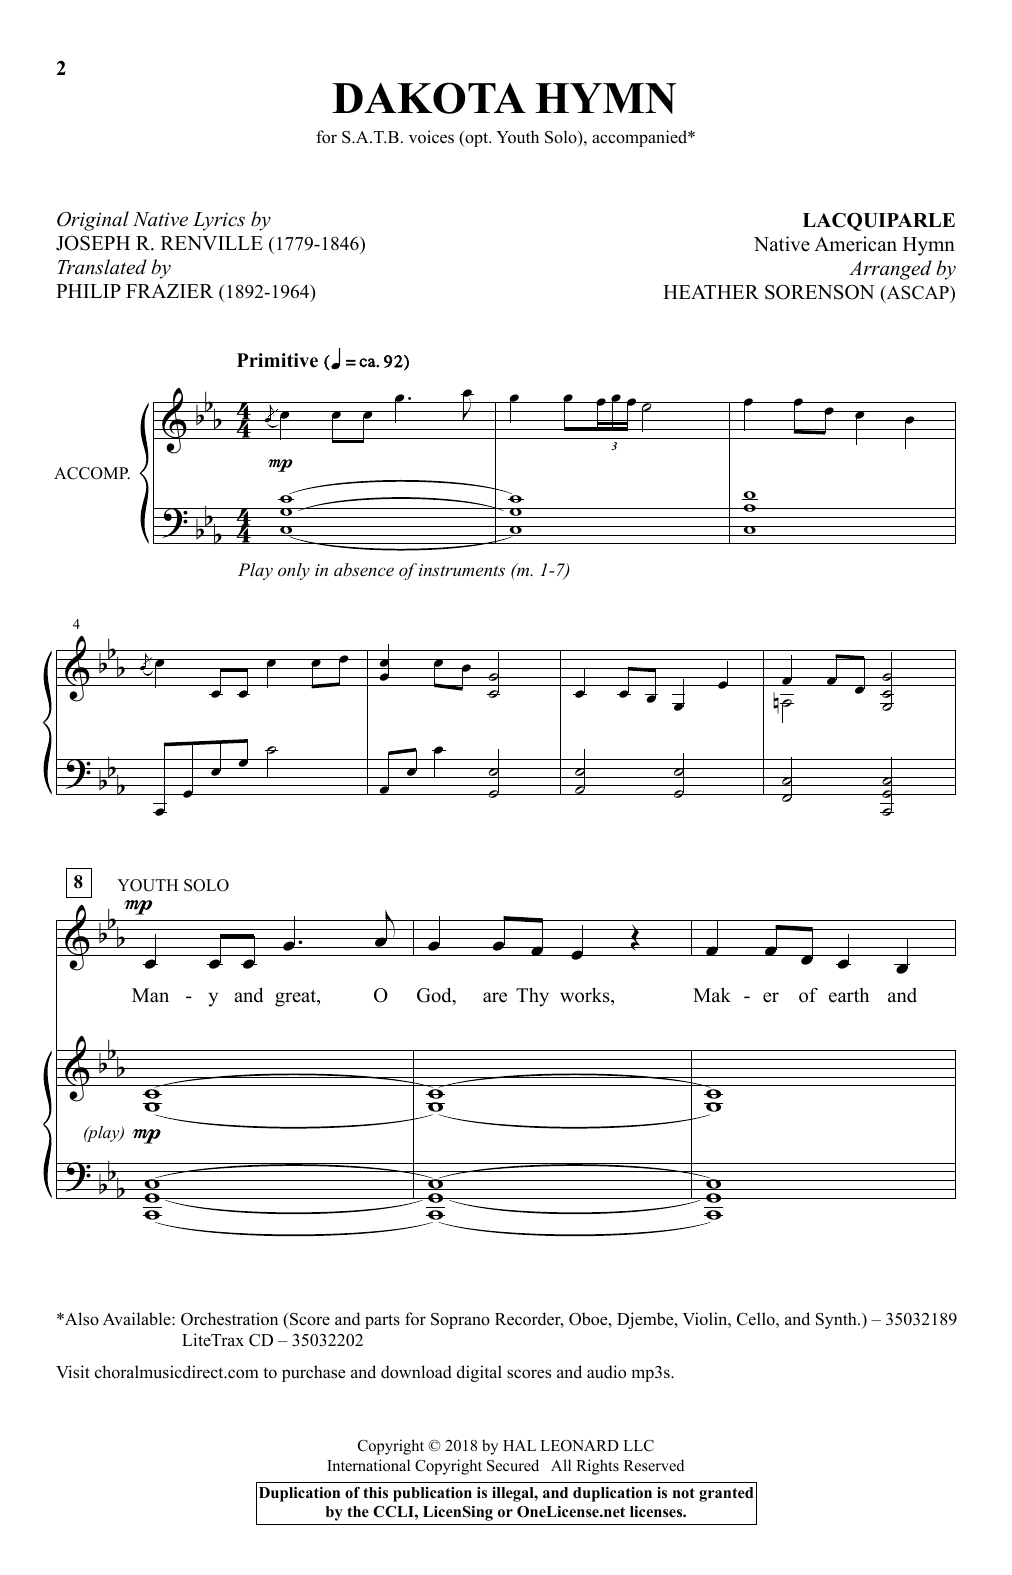 Download Heather Sorenson Dakota Hymn Sheet Music and learn how to play SATB PDF digital score in minutes